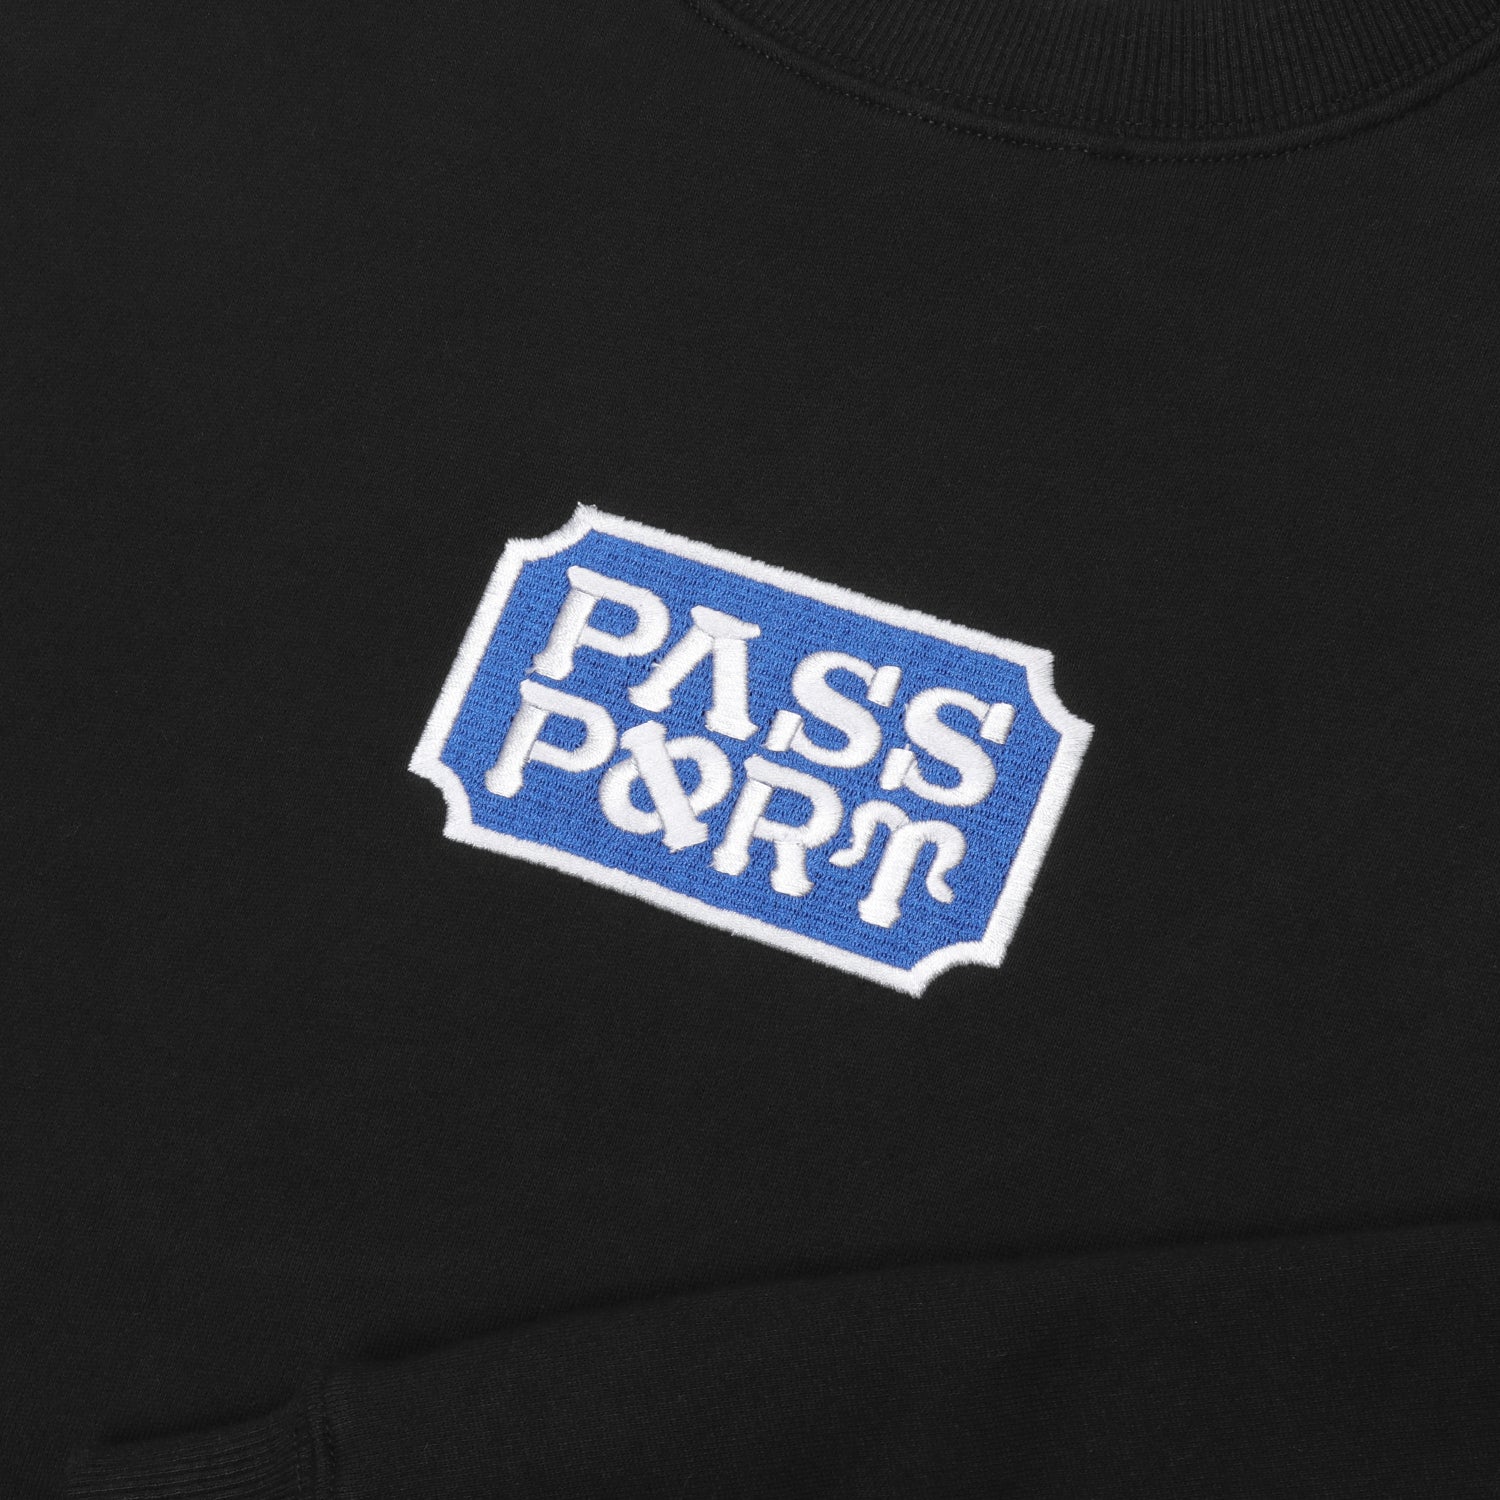 Pass~Port Yearbook Logo Sweater - Black